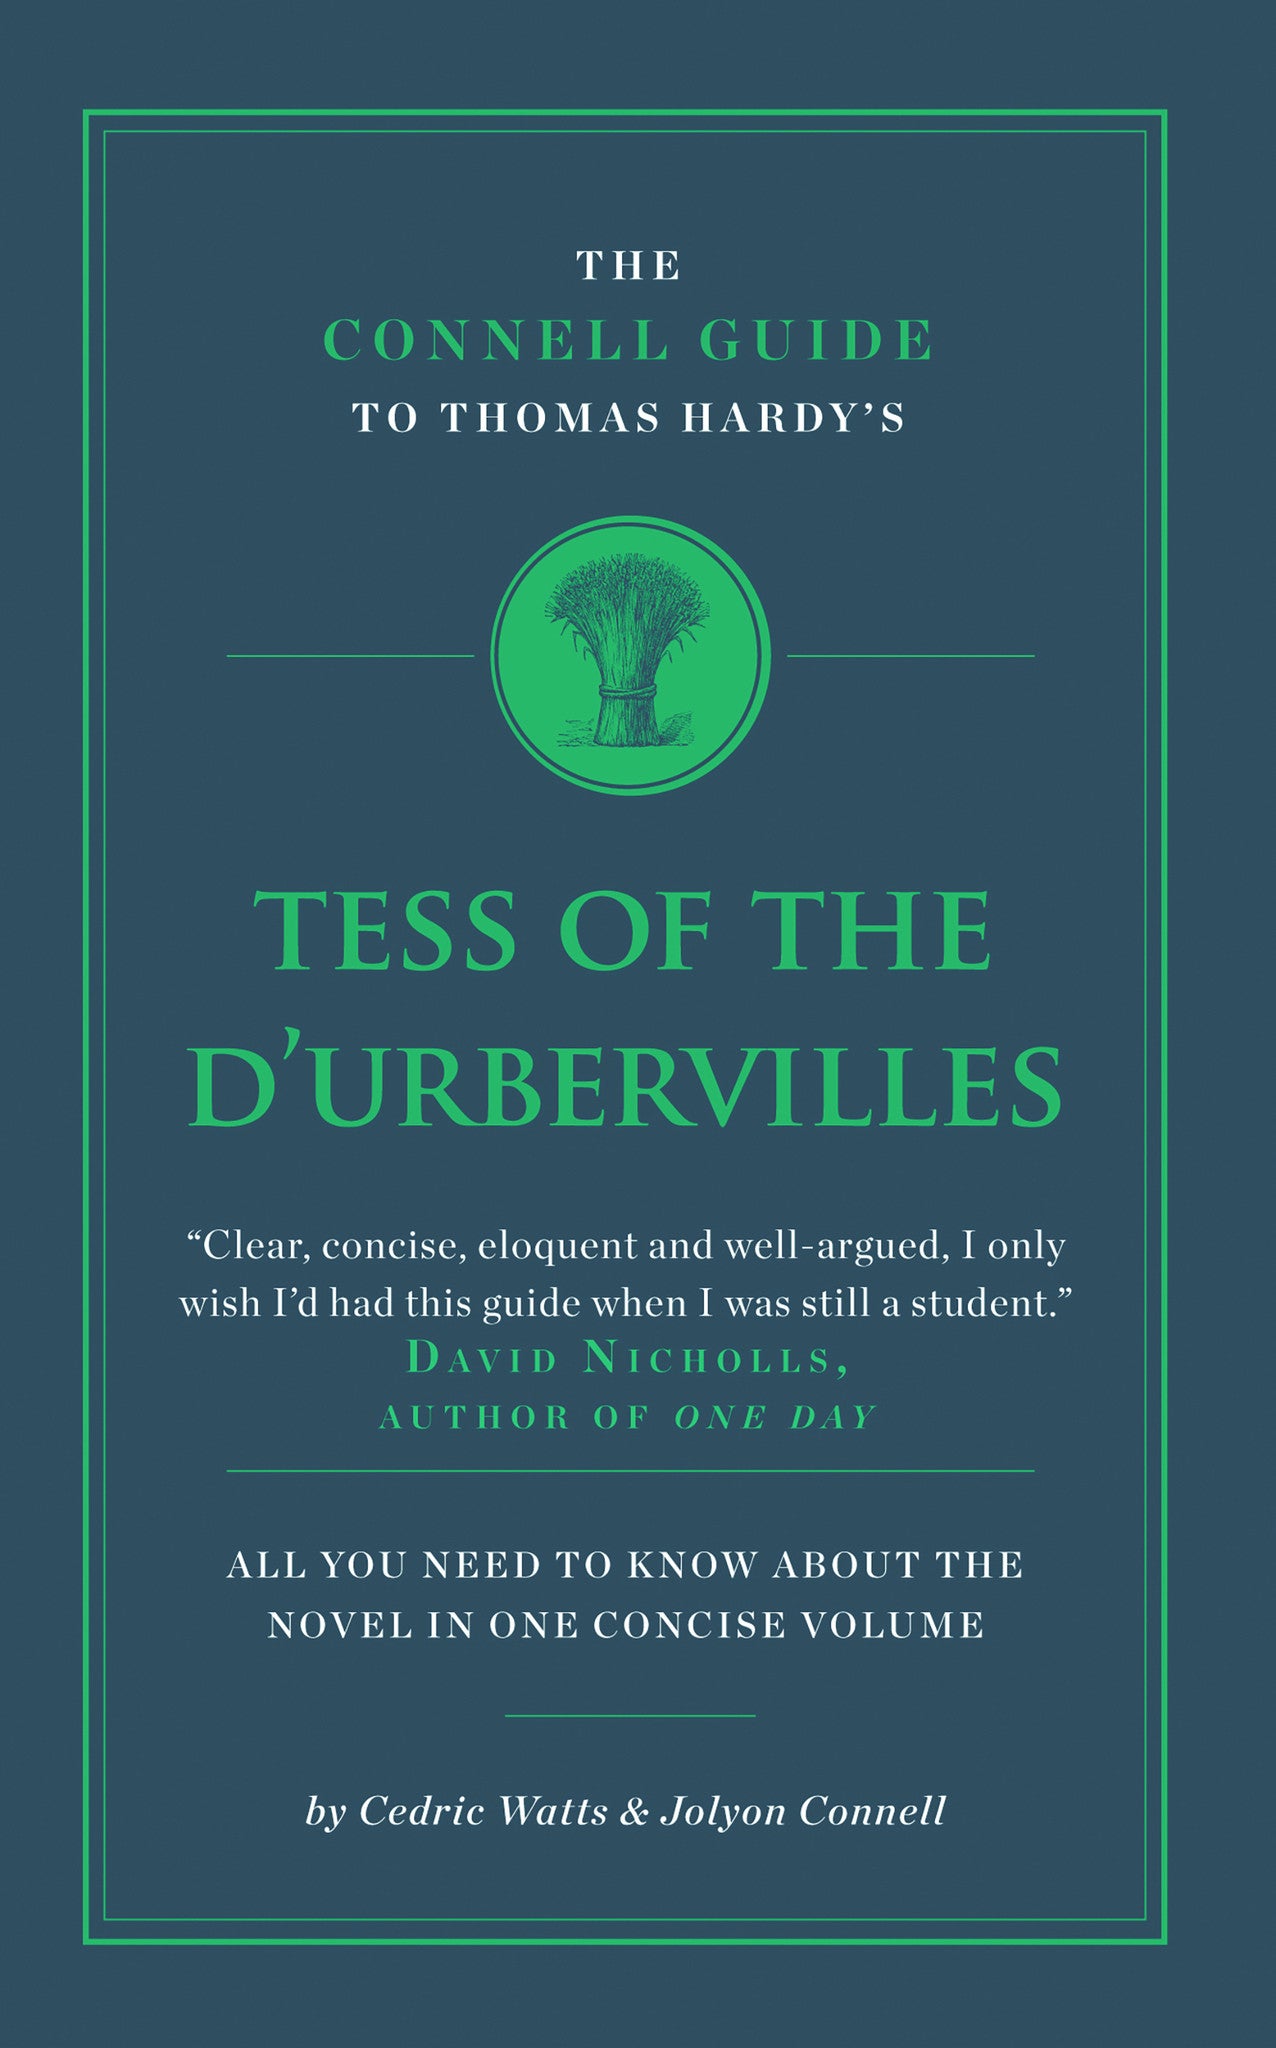 critical analysis of tess of the d urbervilles